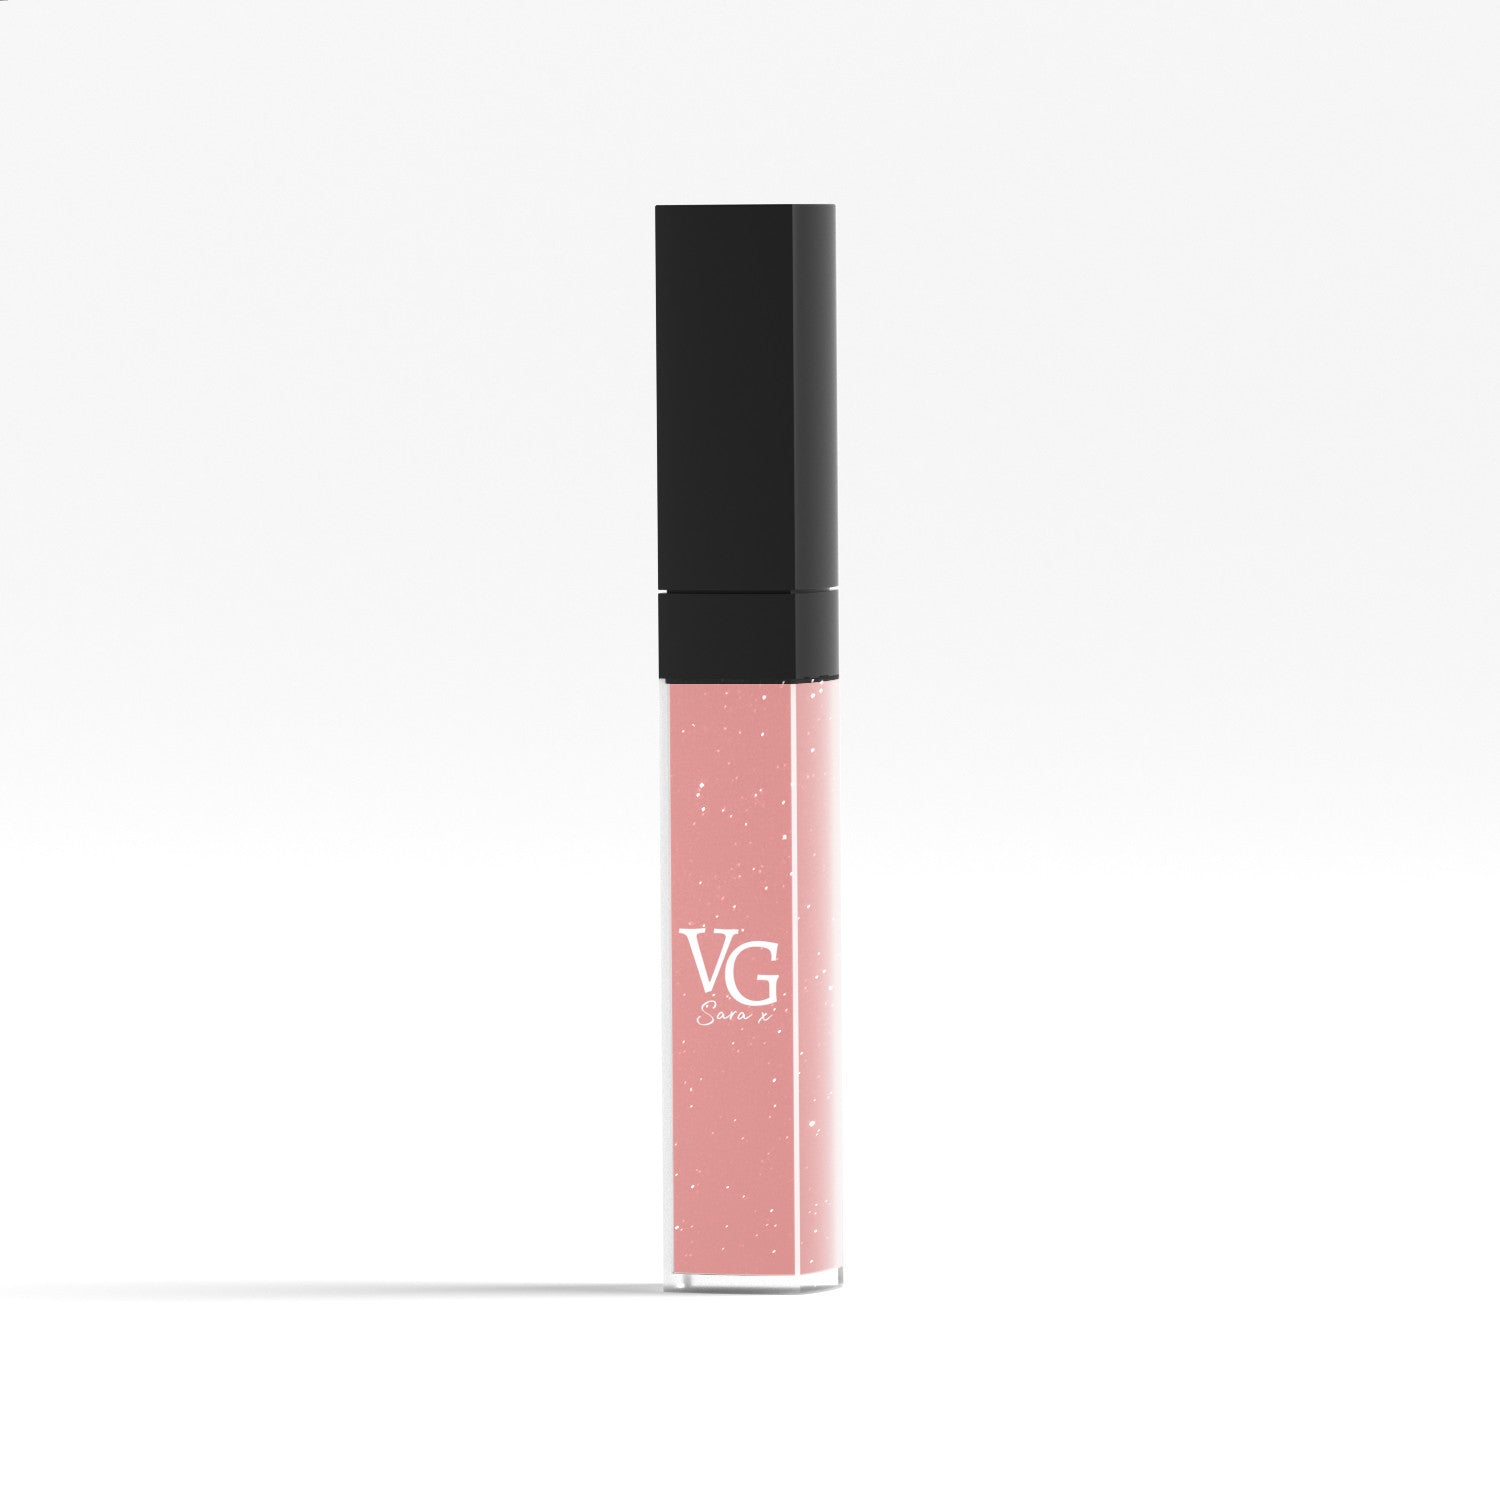 Durable pink vegan liquid lipstick with VG branding